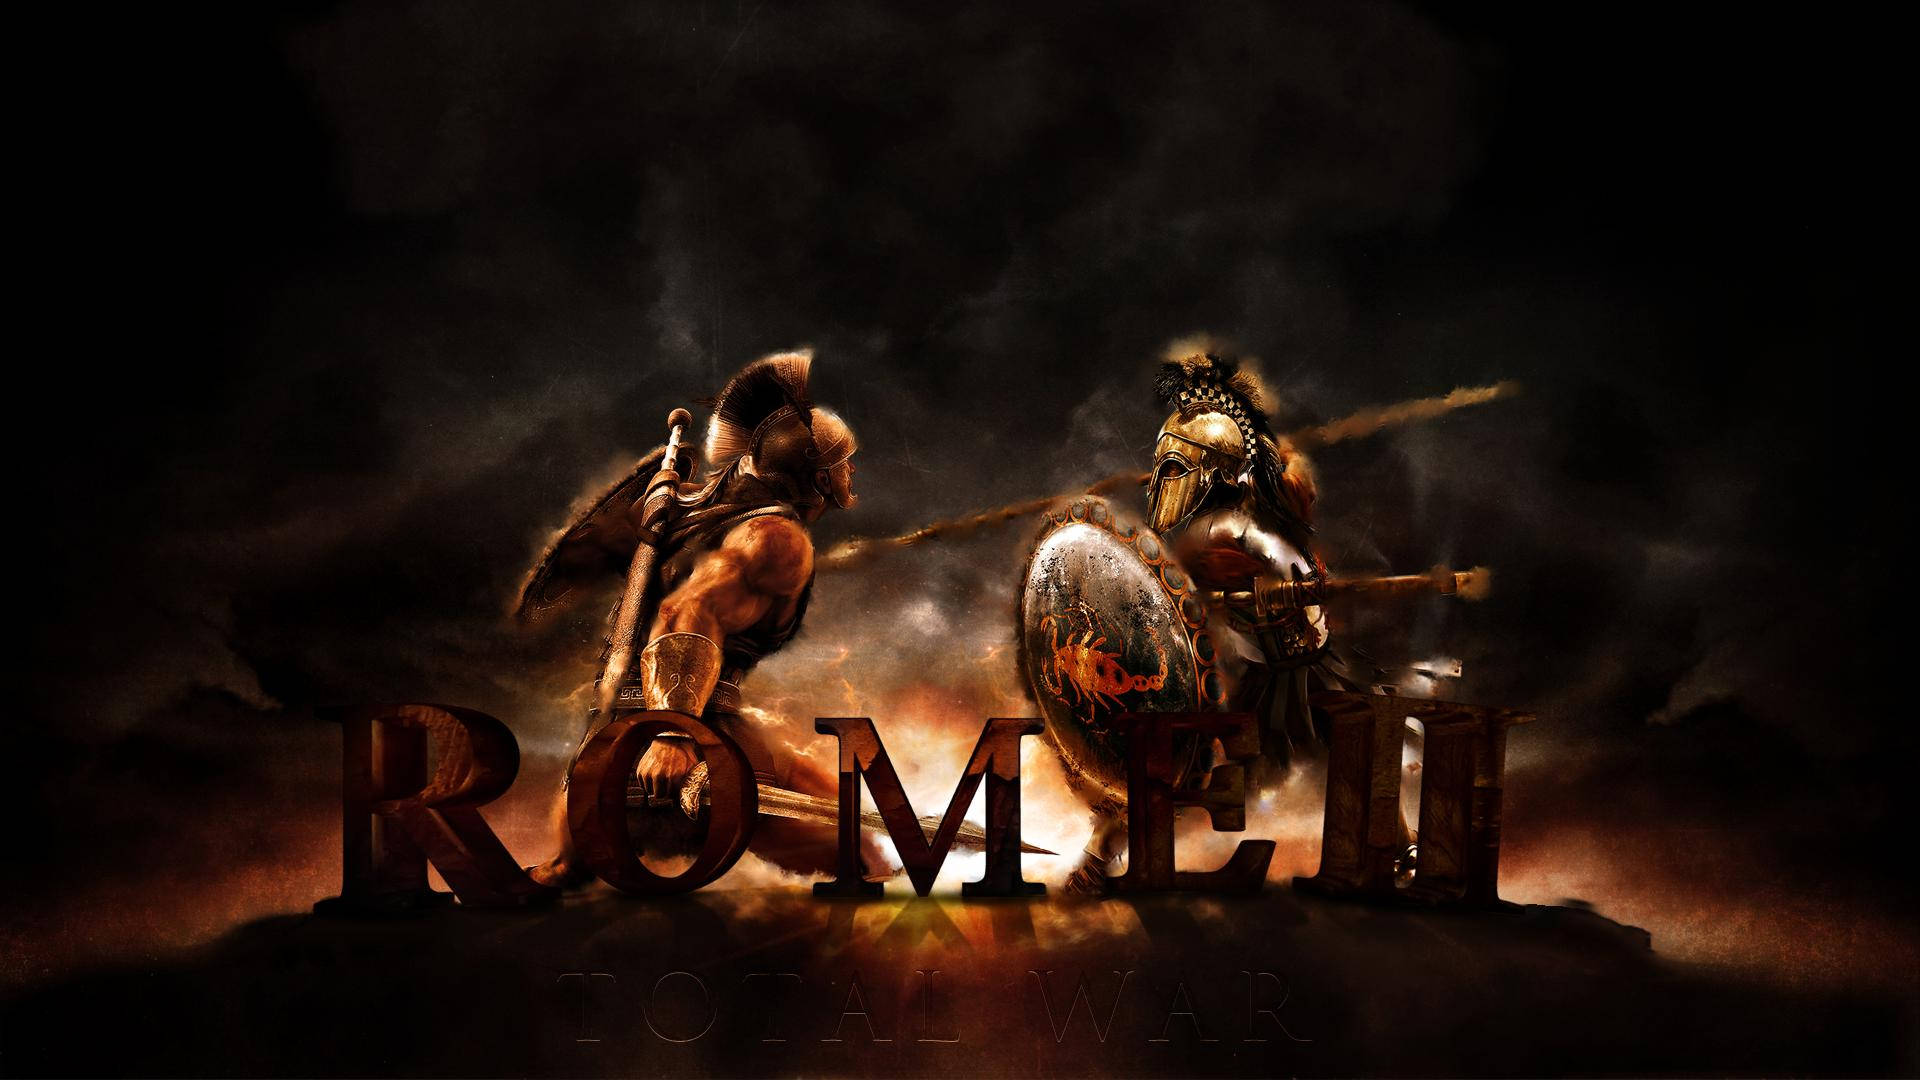 Caption: Rome 2 Game Cover Illustration Background